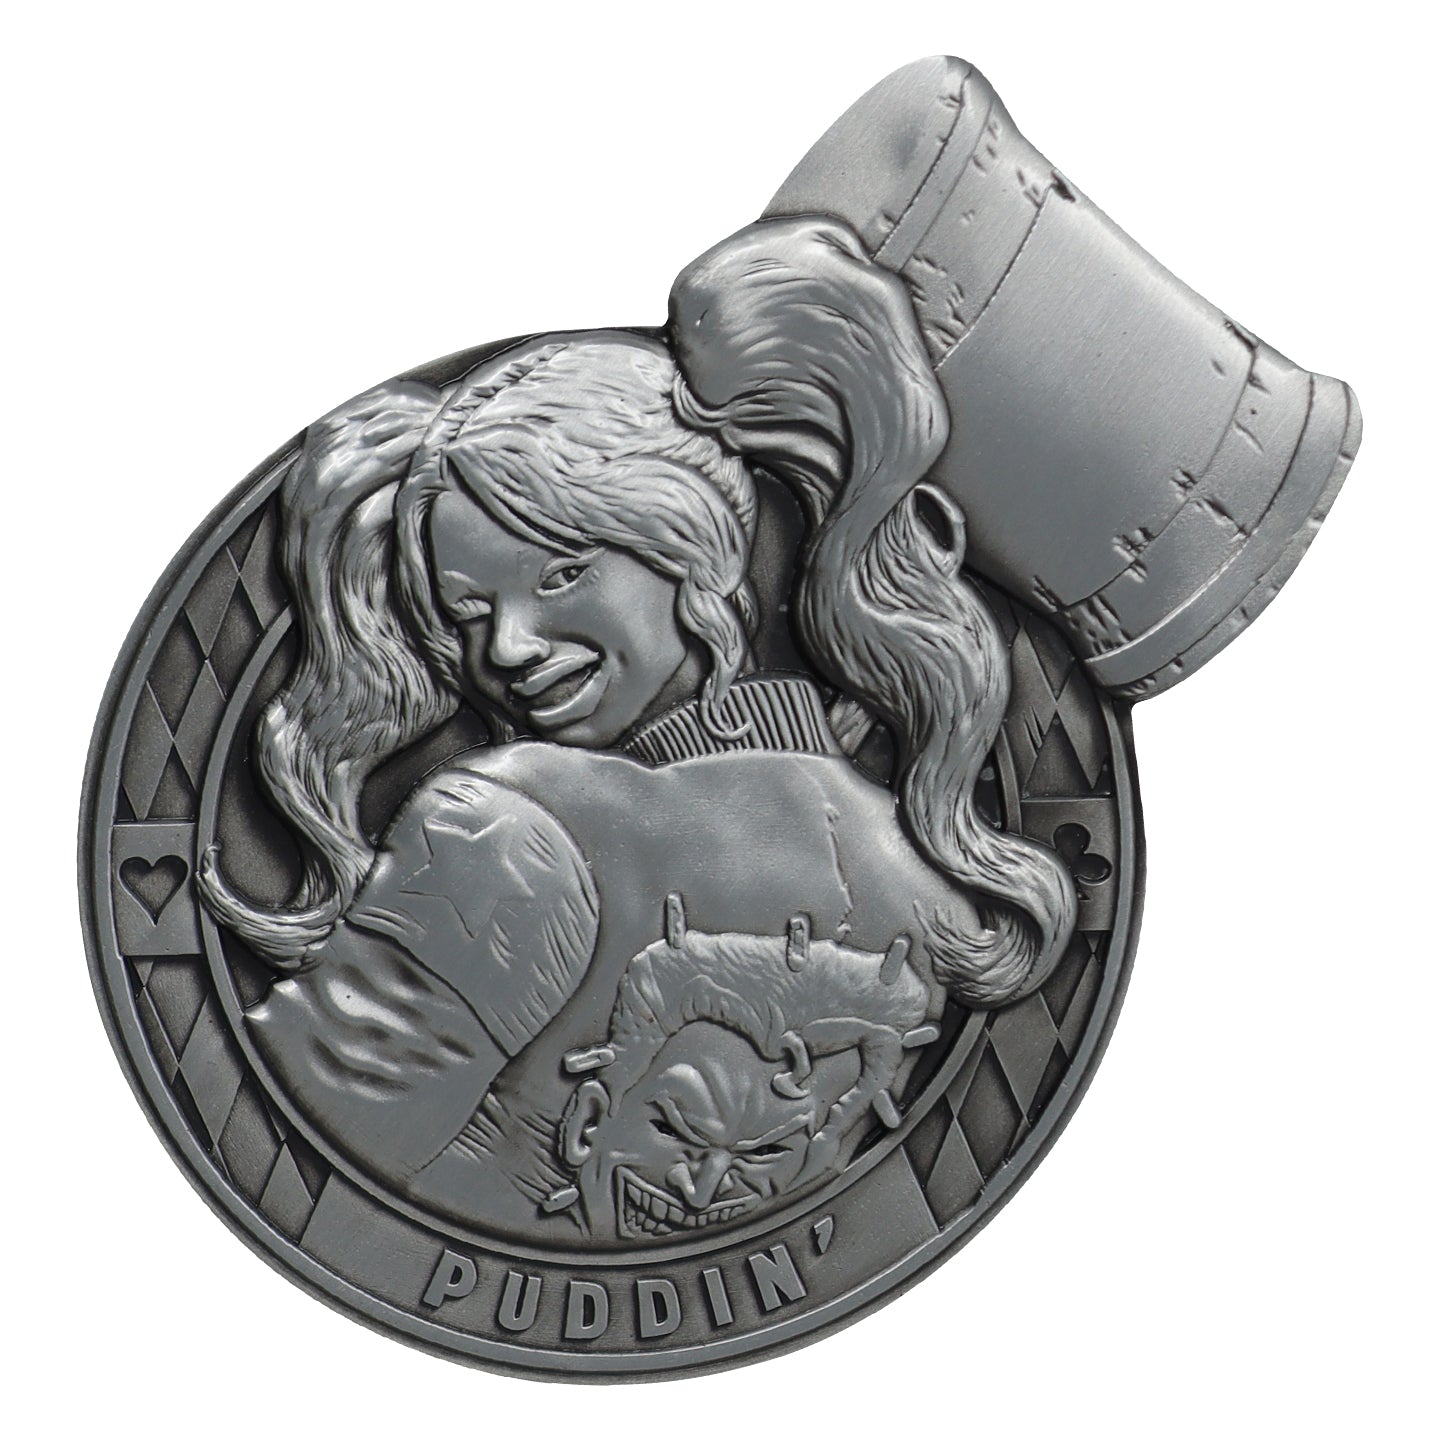 DC Comics Harley Quinn 30th anniversary collectible metal medallion from Fanattik